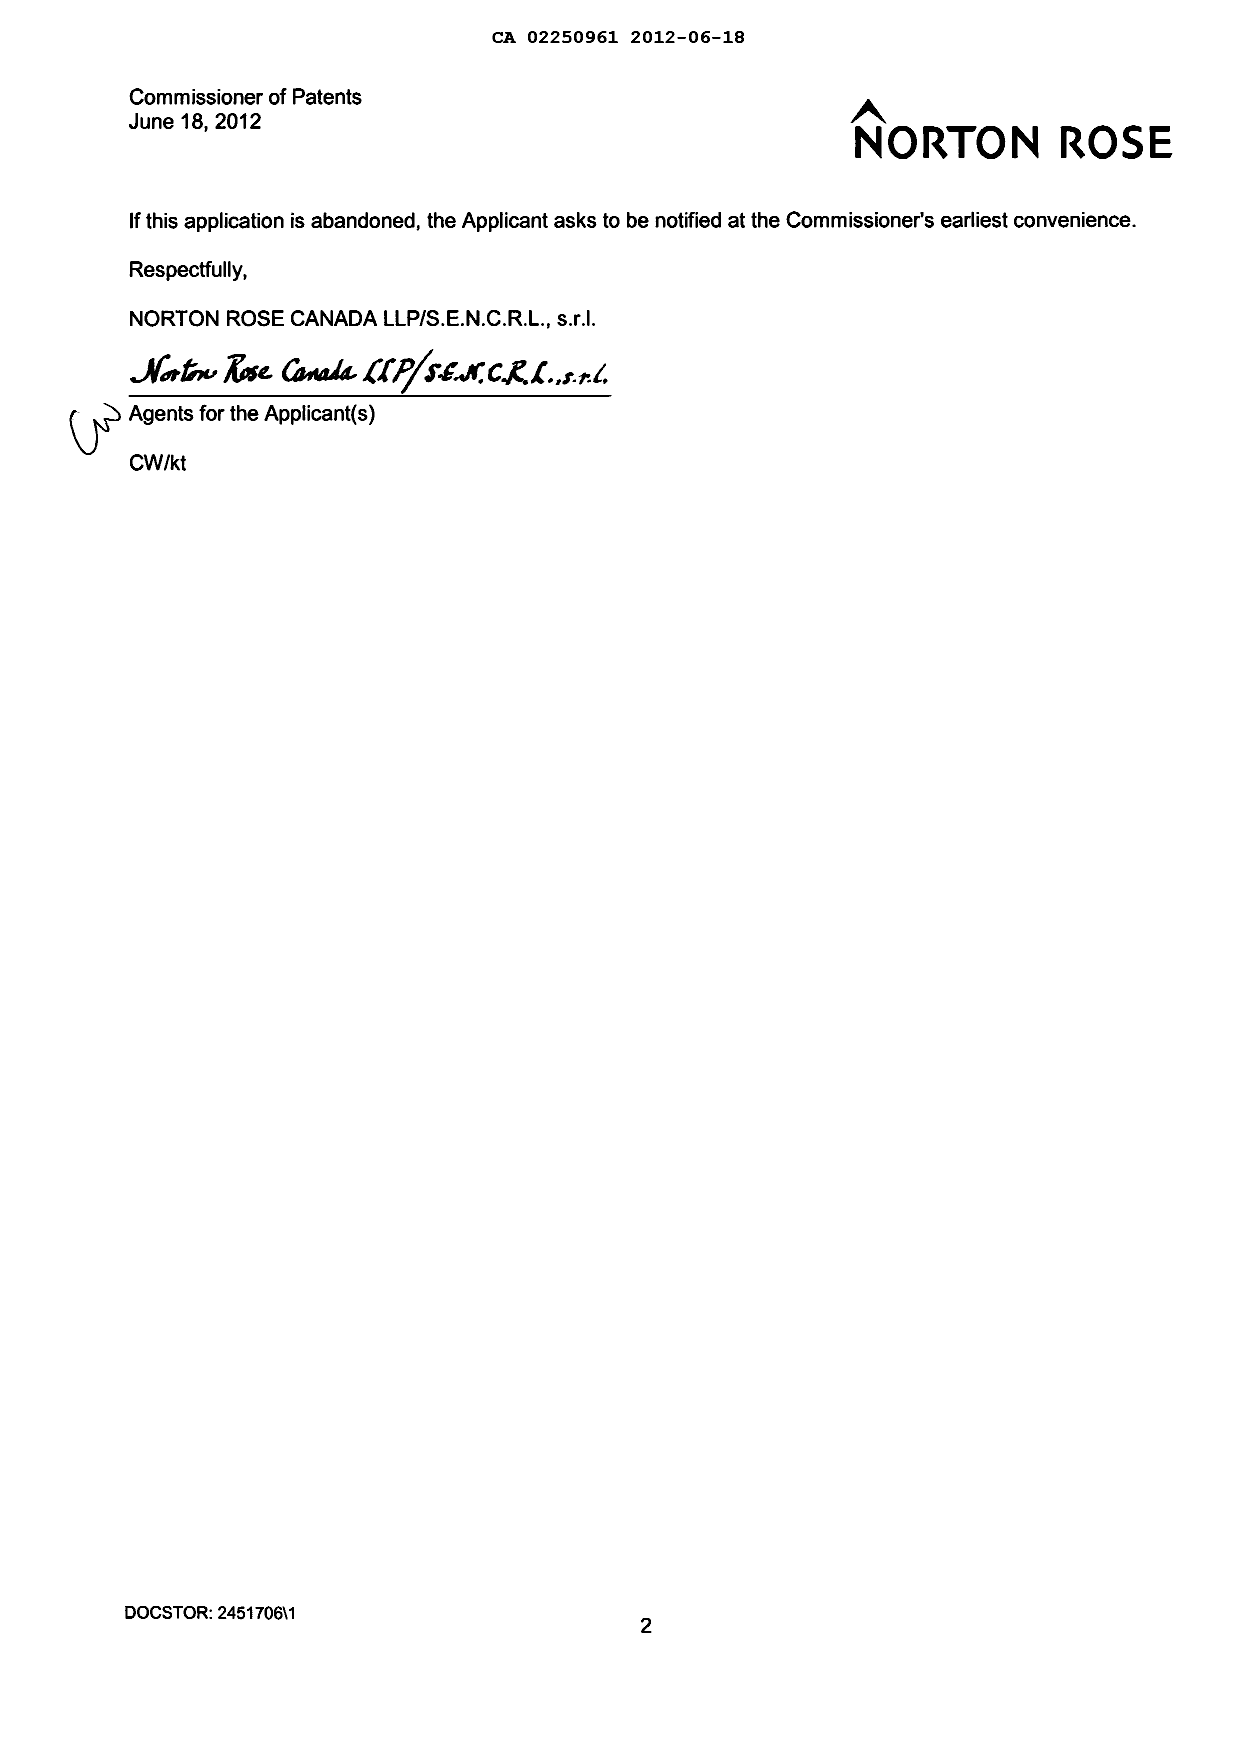 Canadian Patent Document 2250961. Correspondence 20120618. Image 2 of 2